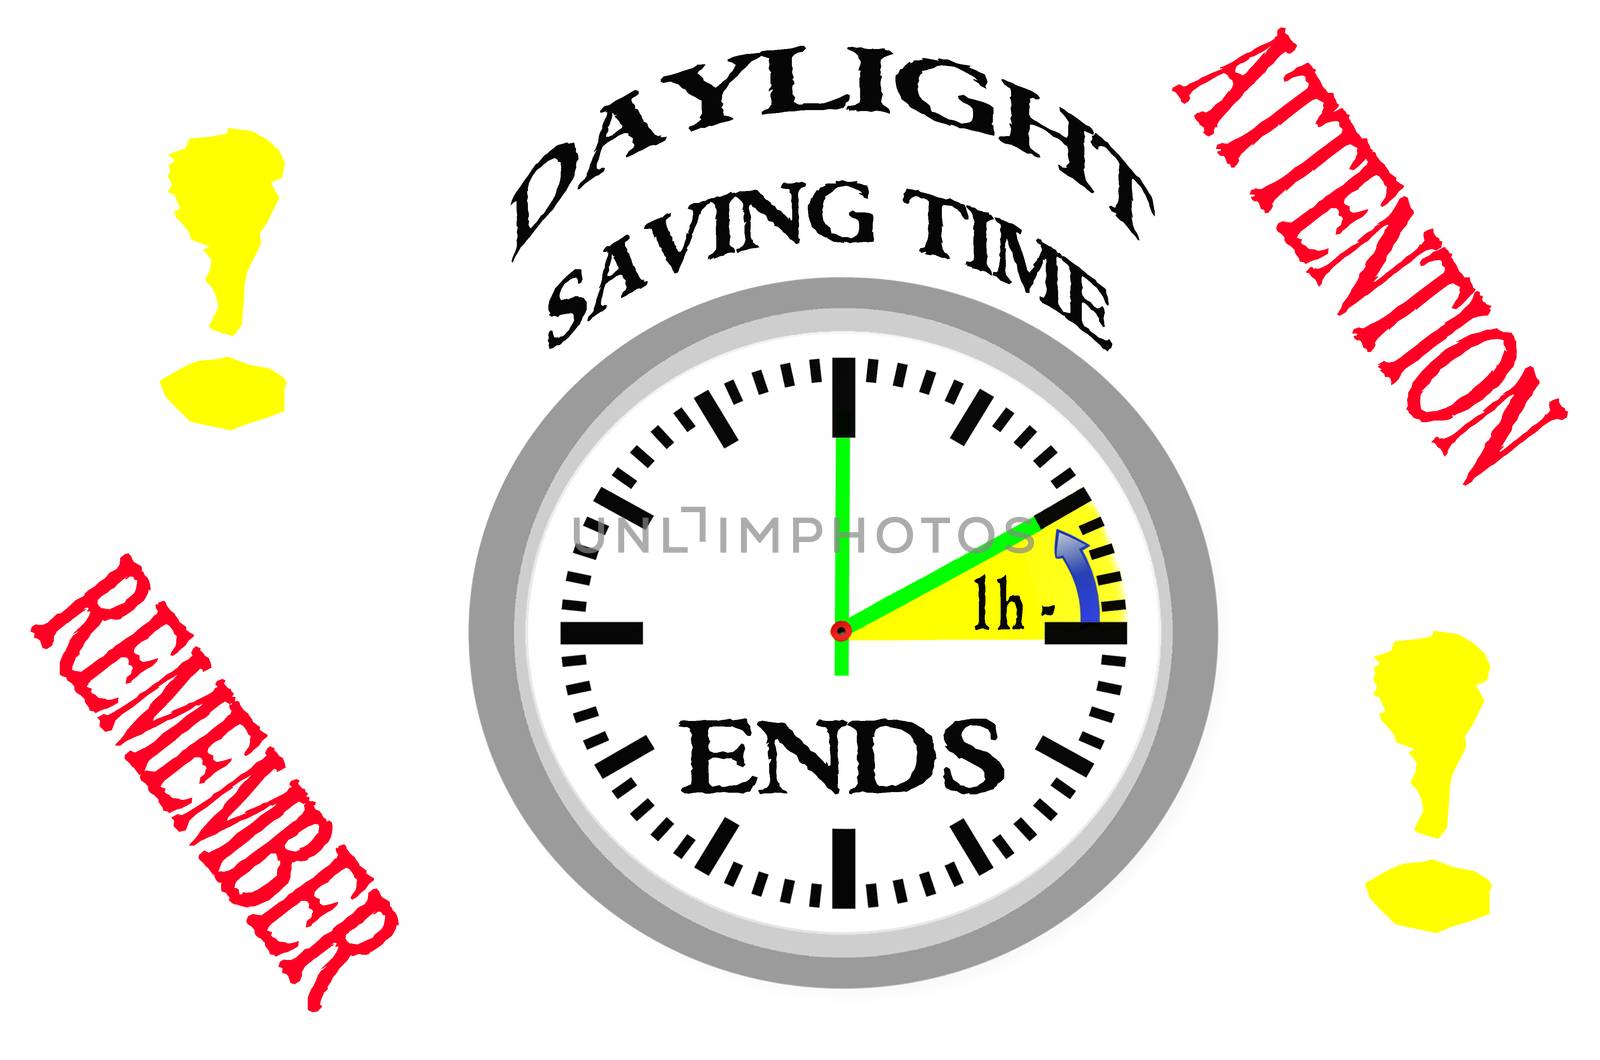 Daylight saving time ends.